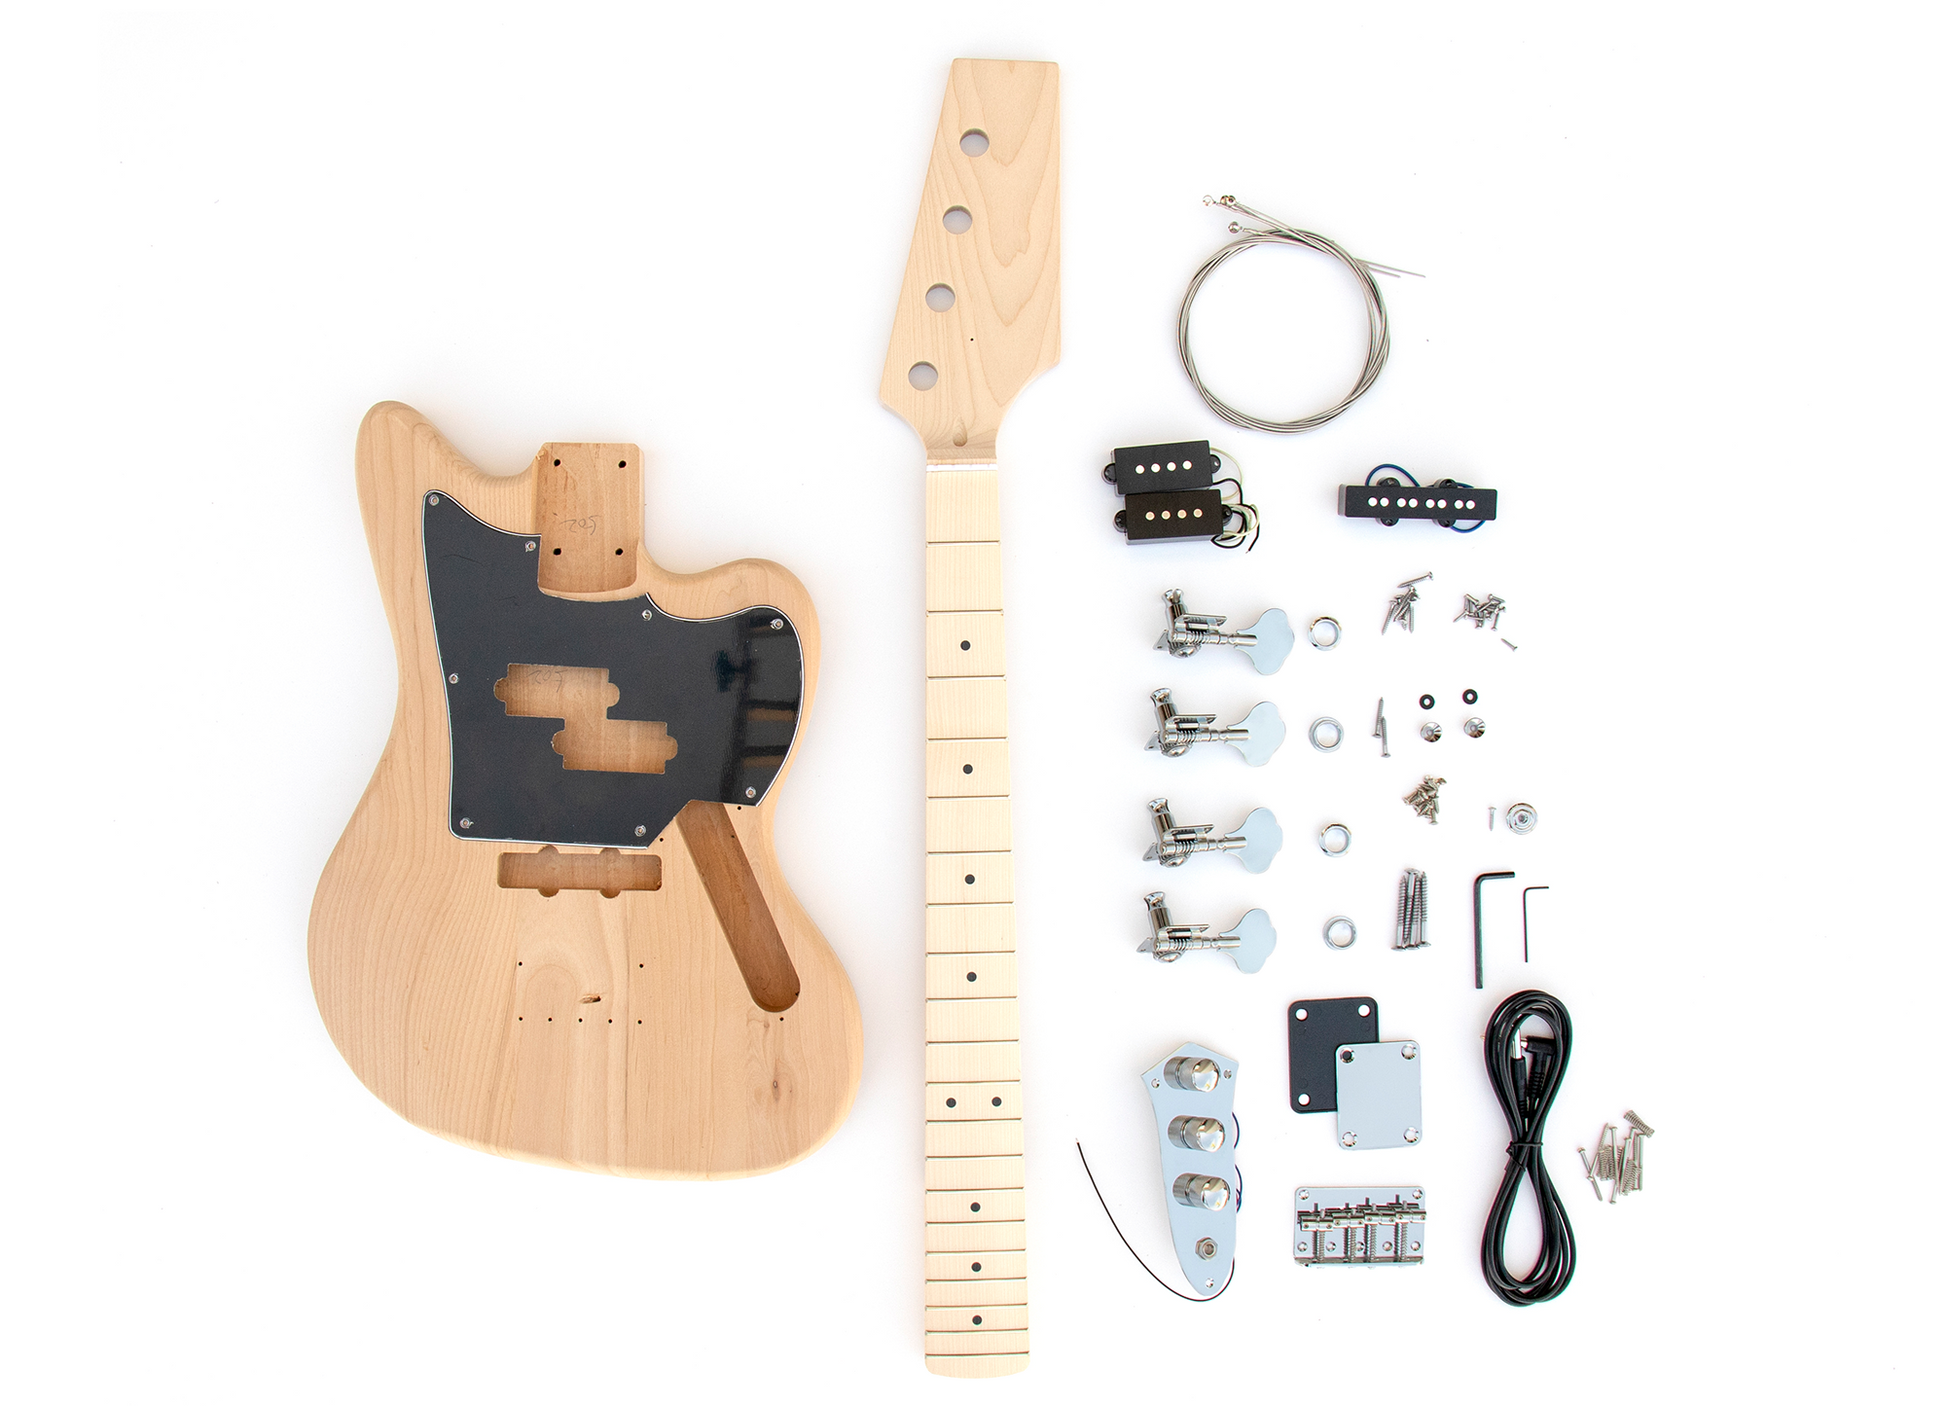 Vwg Pj Style Build Your Own Bass Guitar Kit